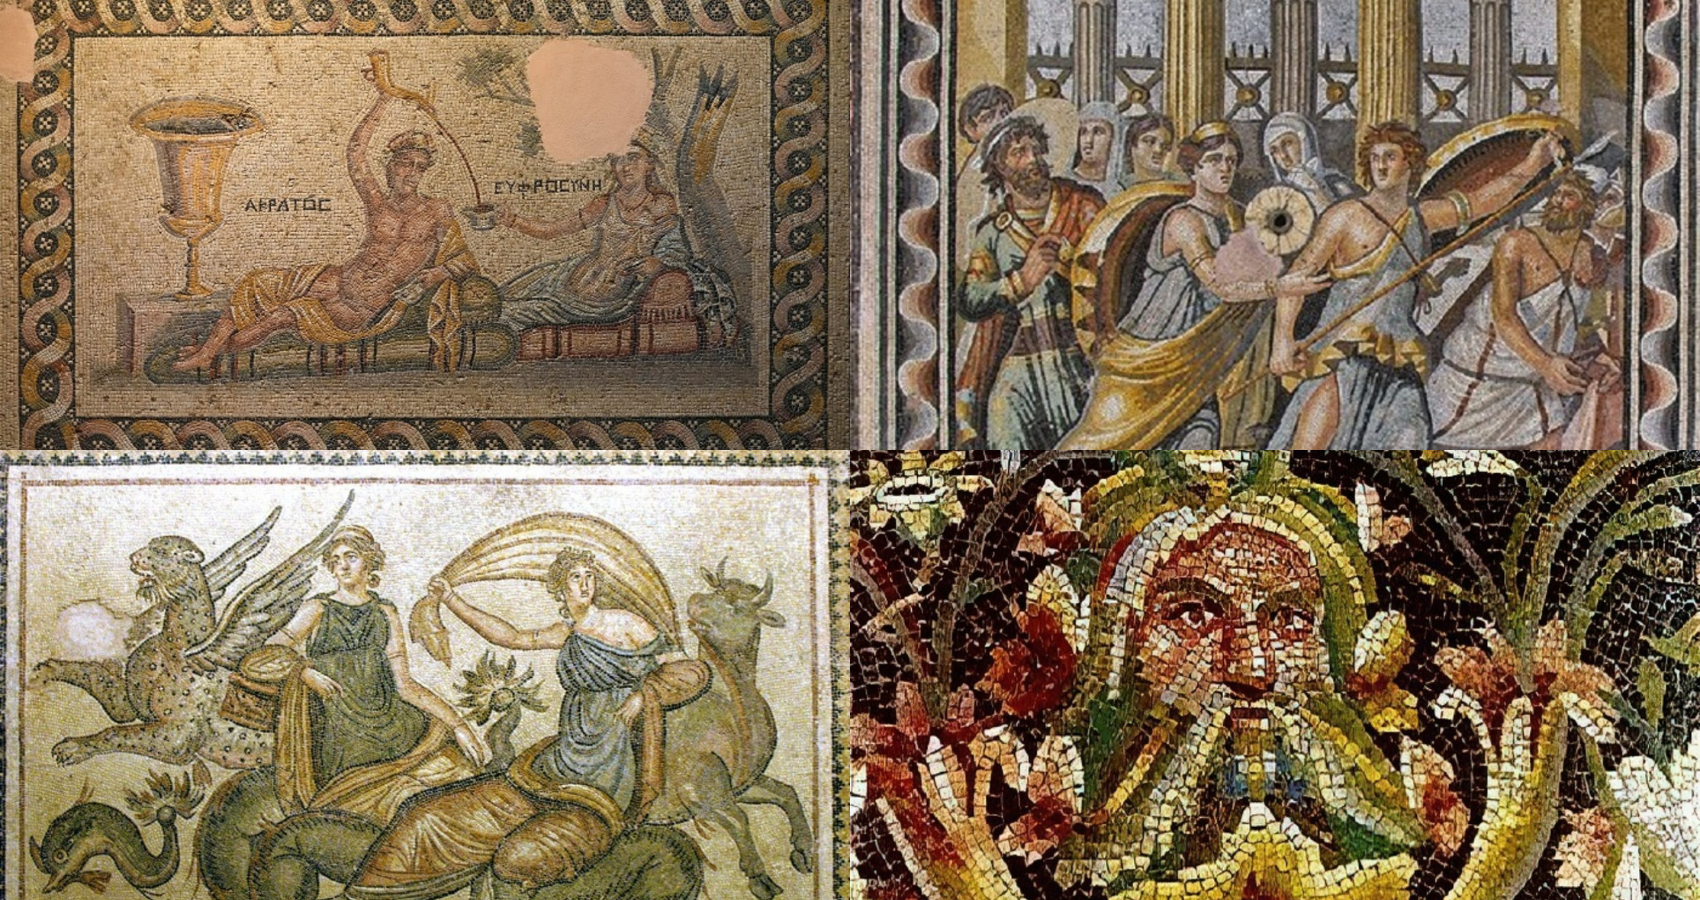 The Stunning Ancient Greek Mosaics of Zeugma